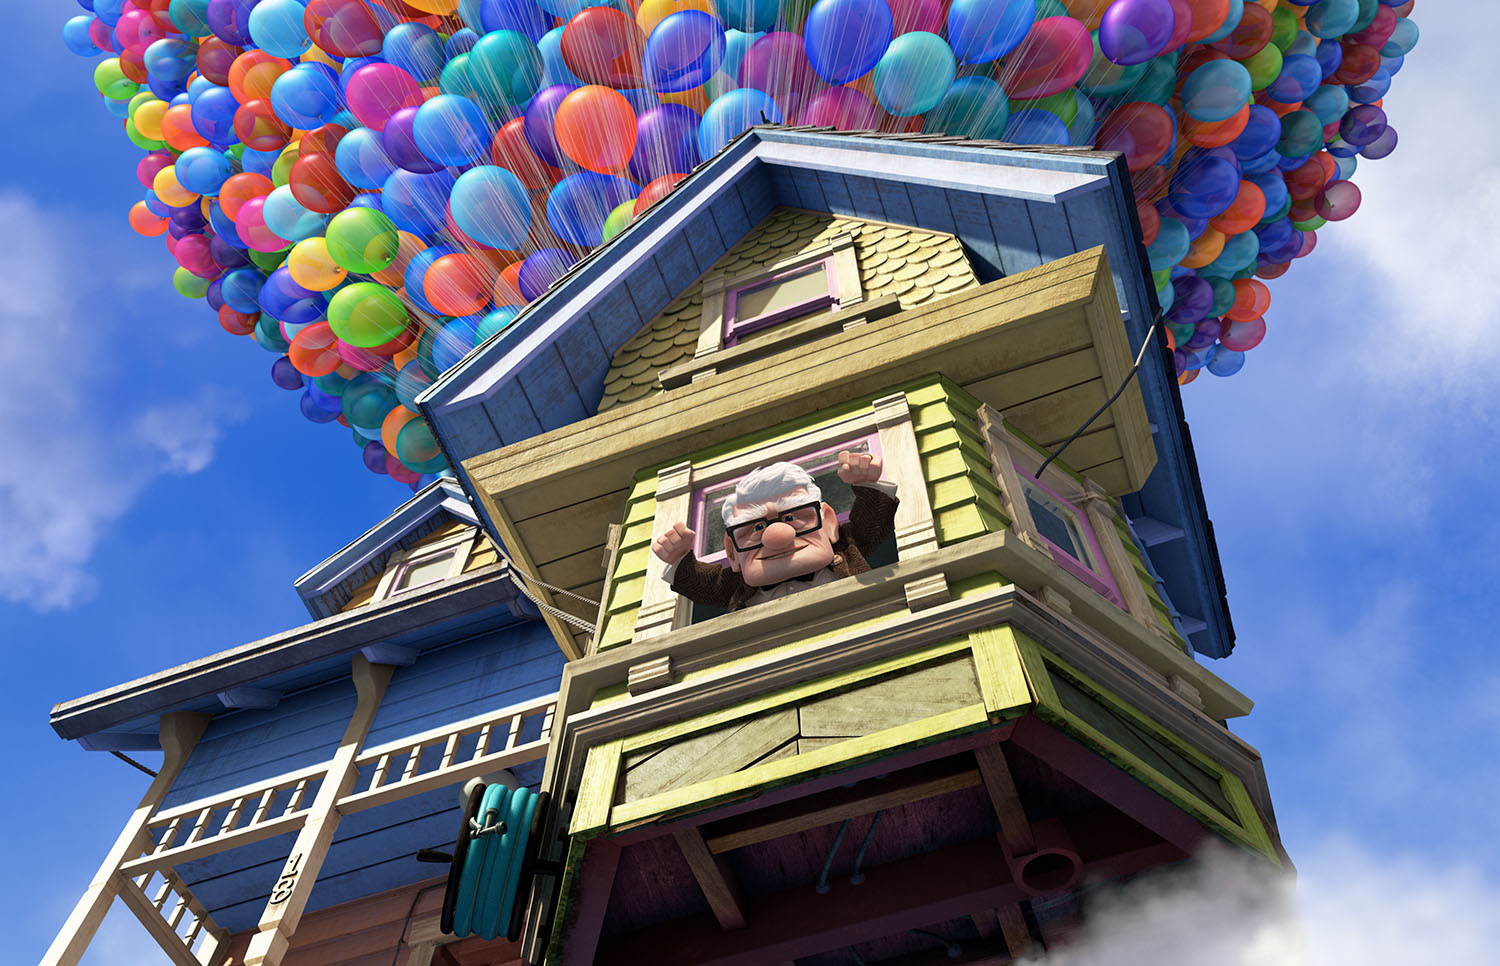 Carl apareció por primera vez en "Up: una aventura de altura" en 2009. (Pixar)